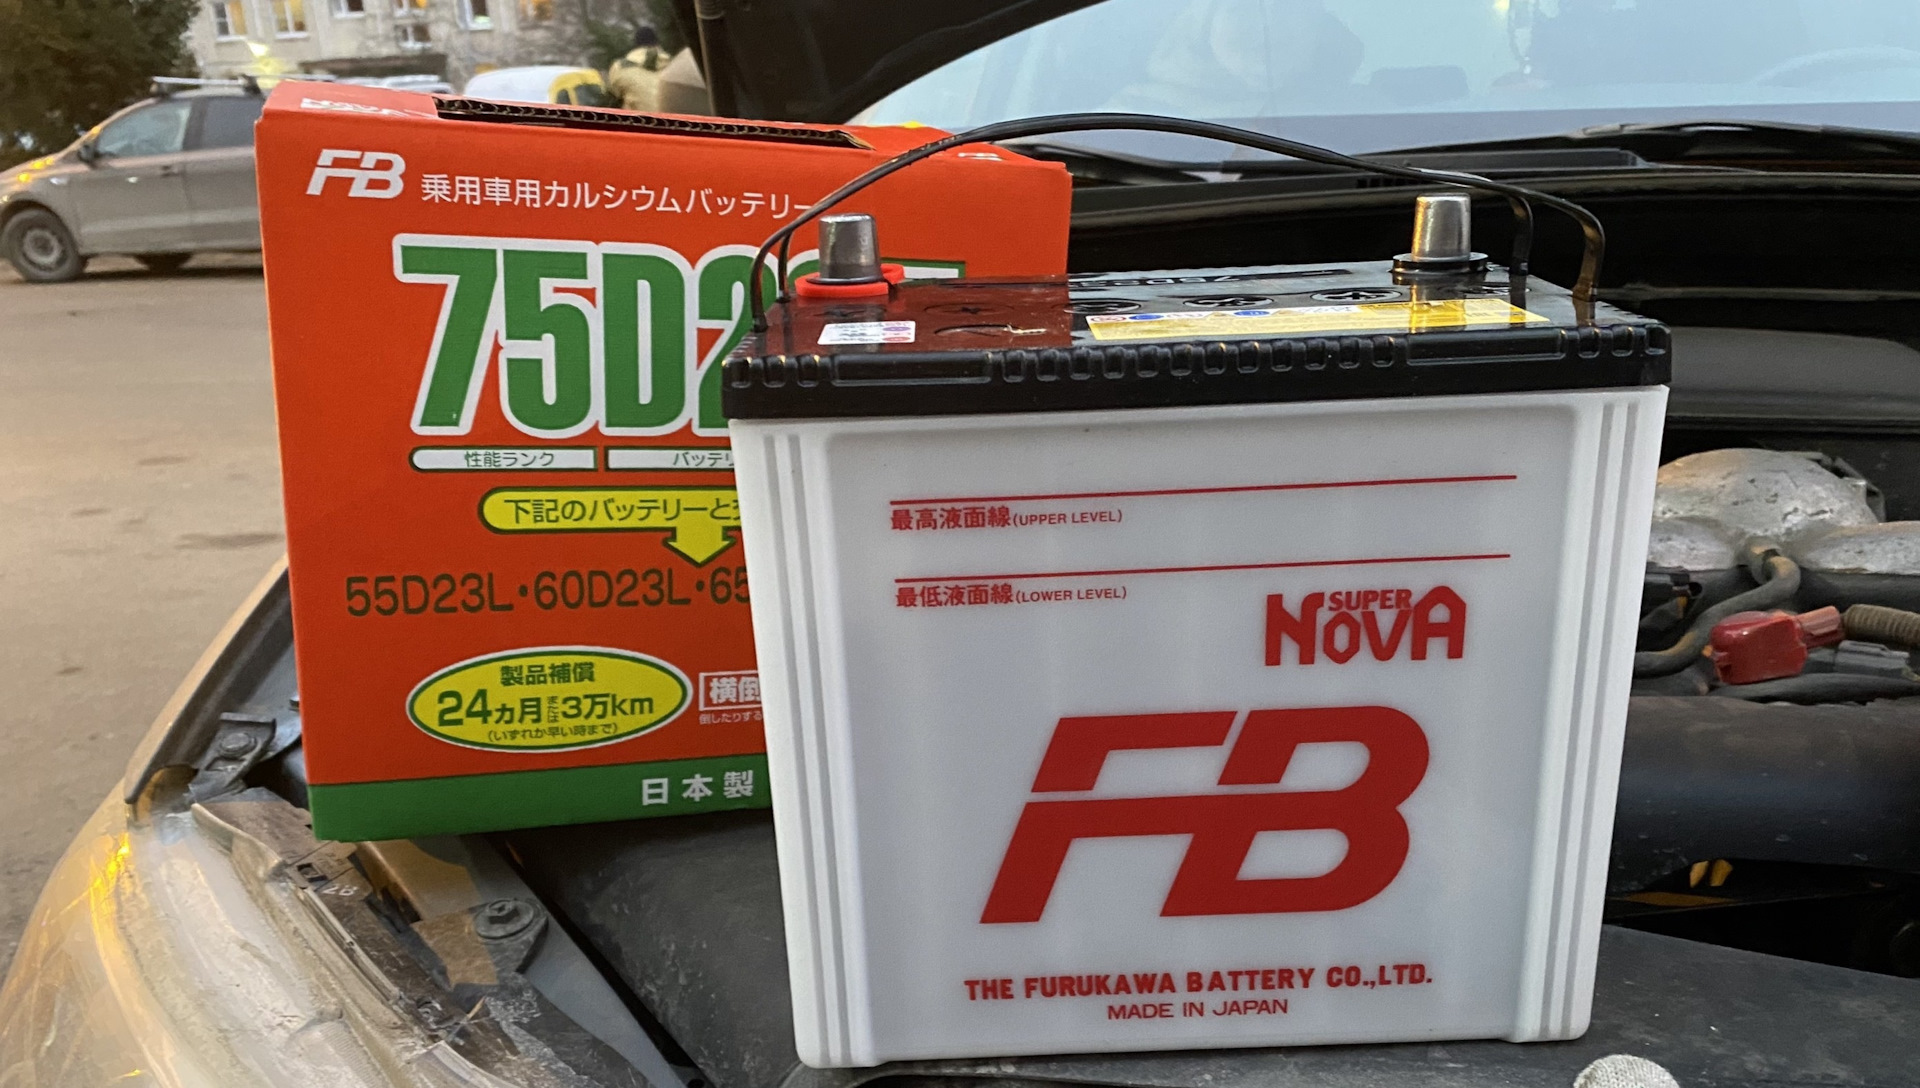 75d23l battery. Fb super Nova 75d23l. Furukawa Battery super Nova 75d23l. Аккумулятор Фурукава 75d23l. Аккумулятор fb super Nova 75d23l.